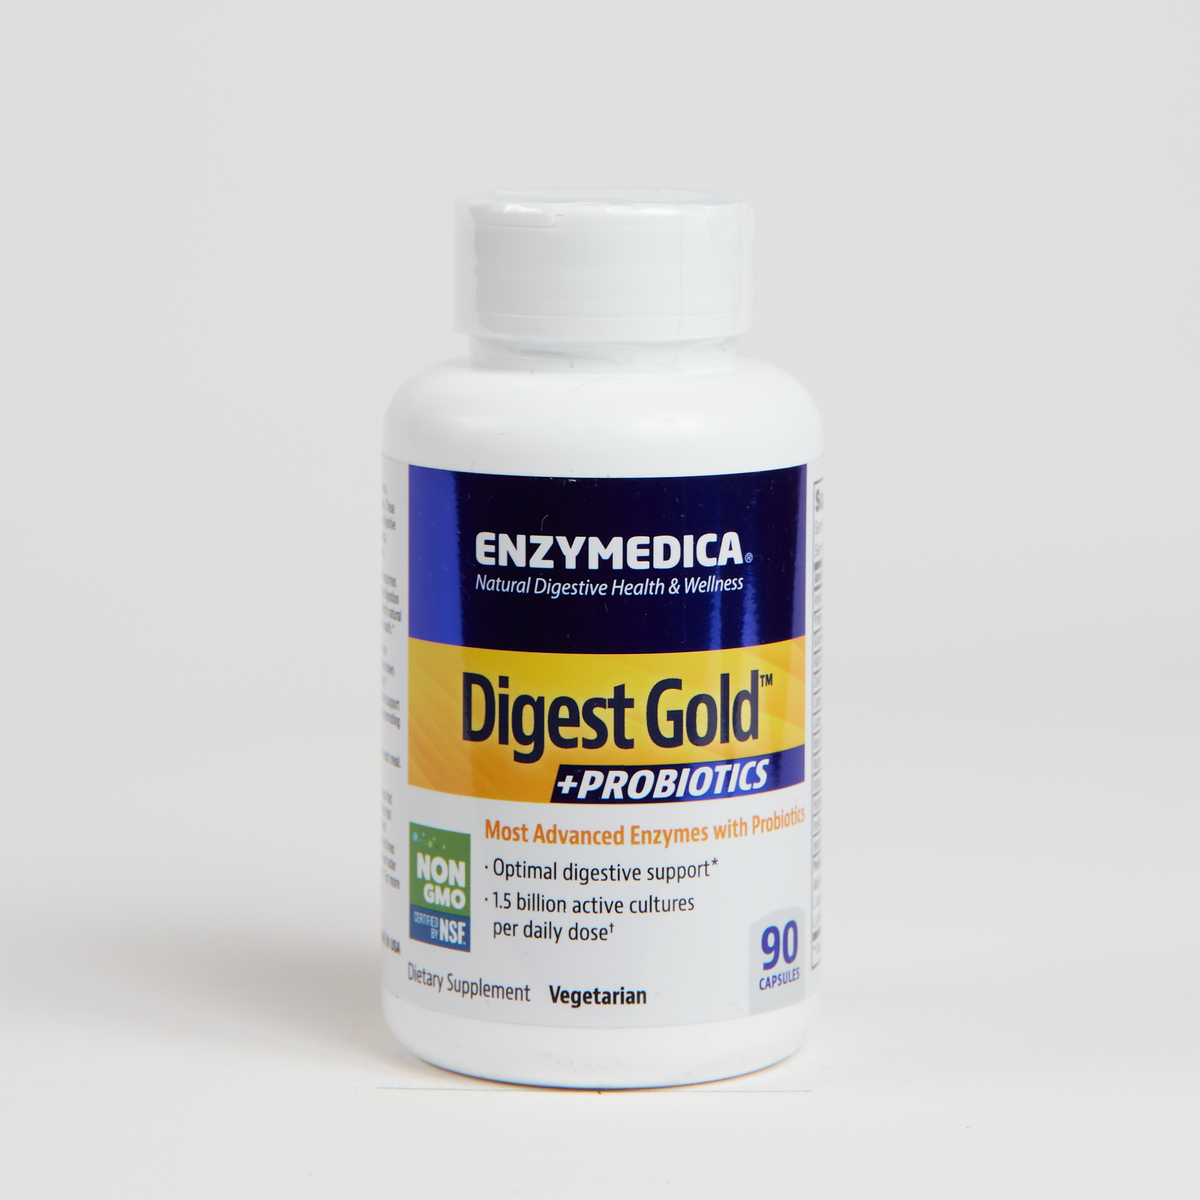 Enzymedica Digest Gold + Probiotics - 90 Count